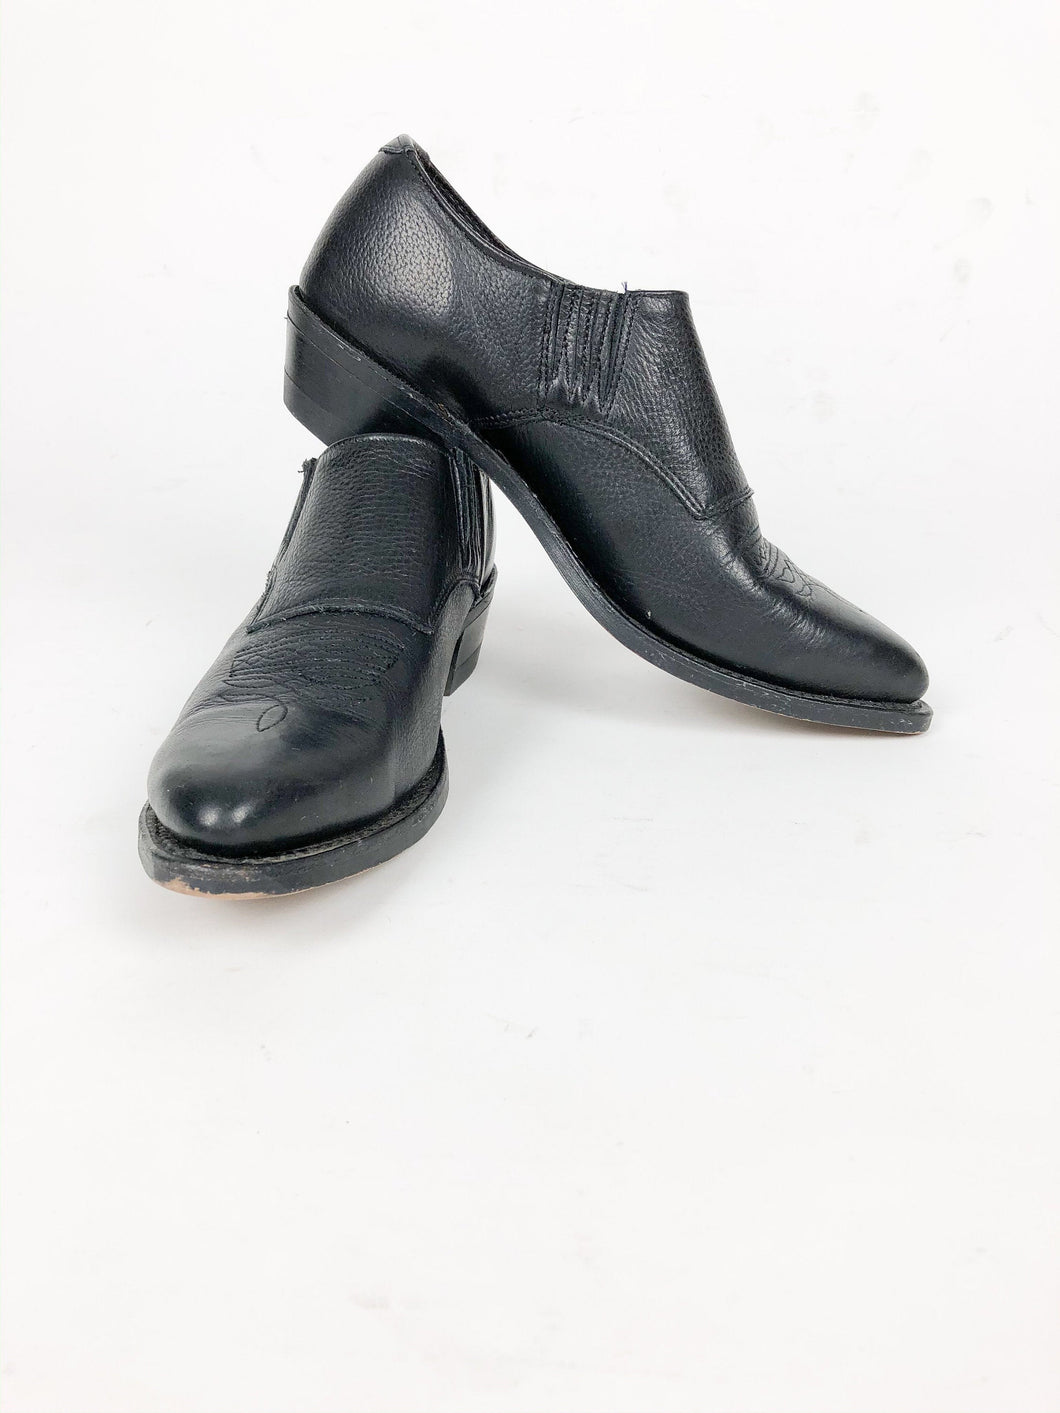 Vintage Black Leather Western Booties Size 7.5